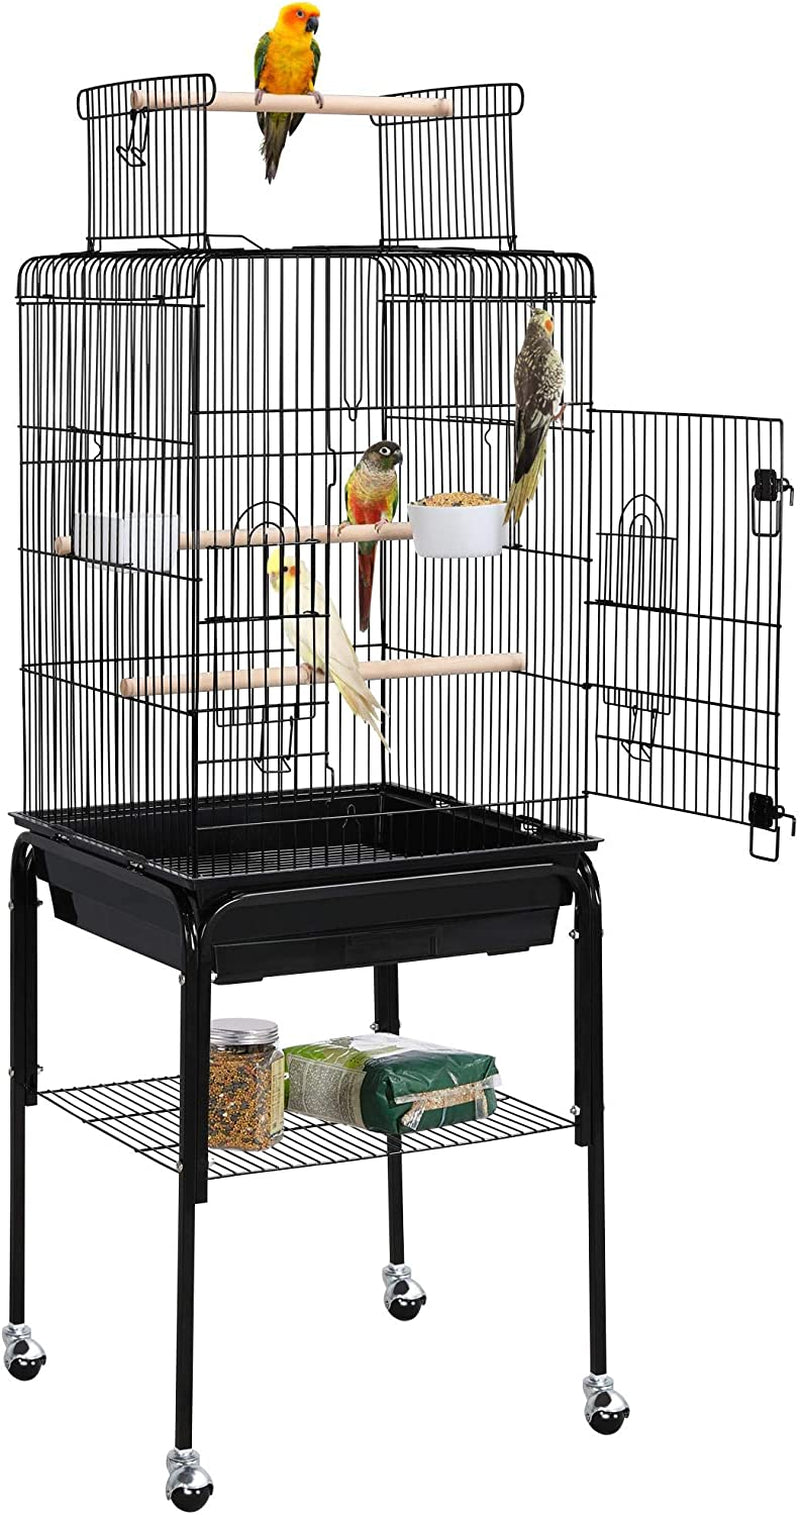 Topeakmart 53.5'' Iron Open Play Top Bird Cage with Stand & Perch for Small Birds Budgies Lovebirds Parakeets, Almond Animals & Pet Supplies > Pet Supplies > Bird Supplies Topeakmart Black  